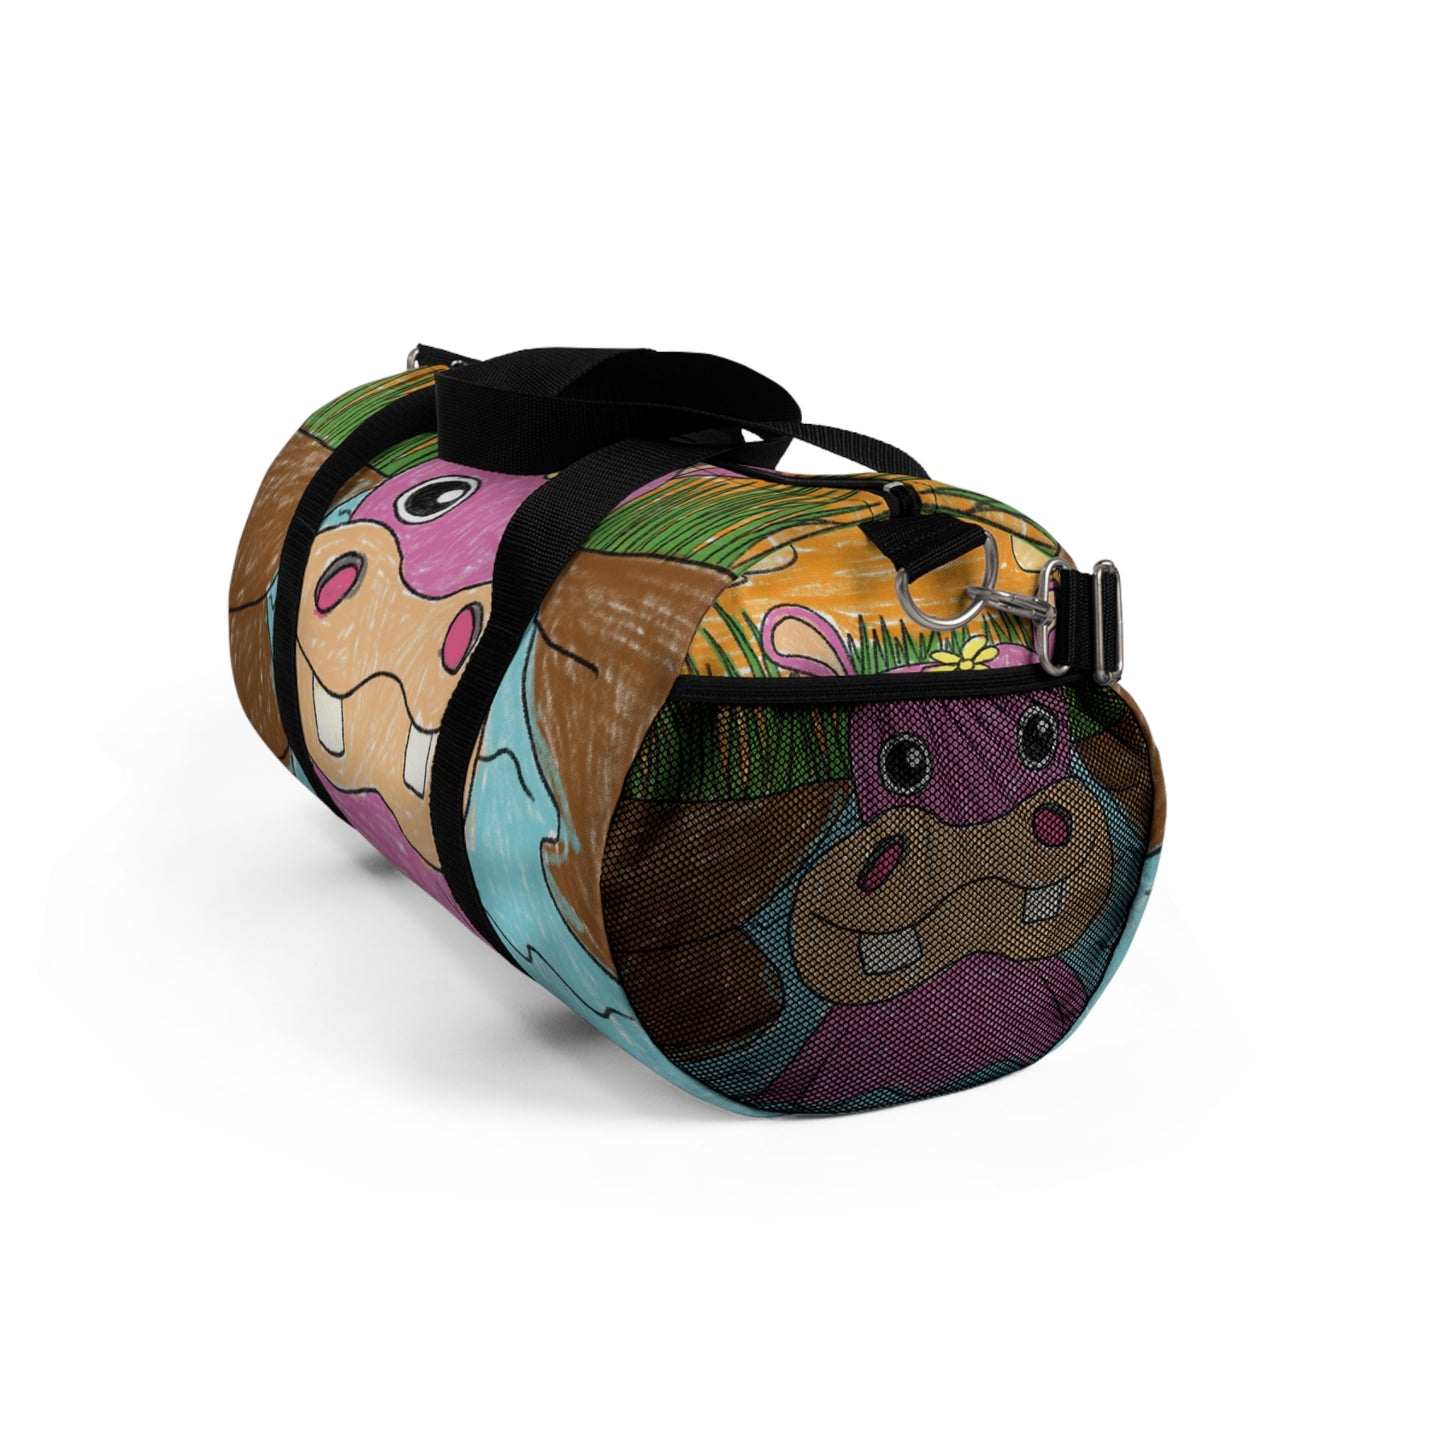 Hippo Hippopotamus Animal Creature Graphic Duffel Bag